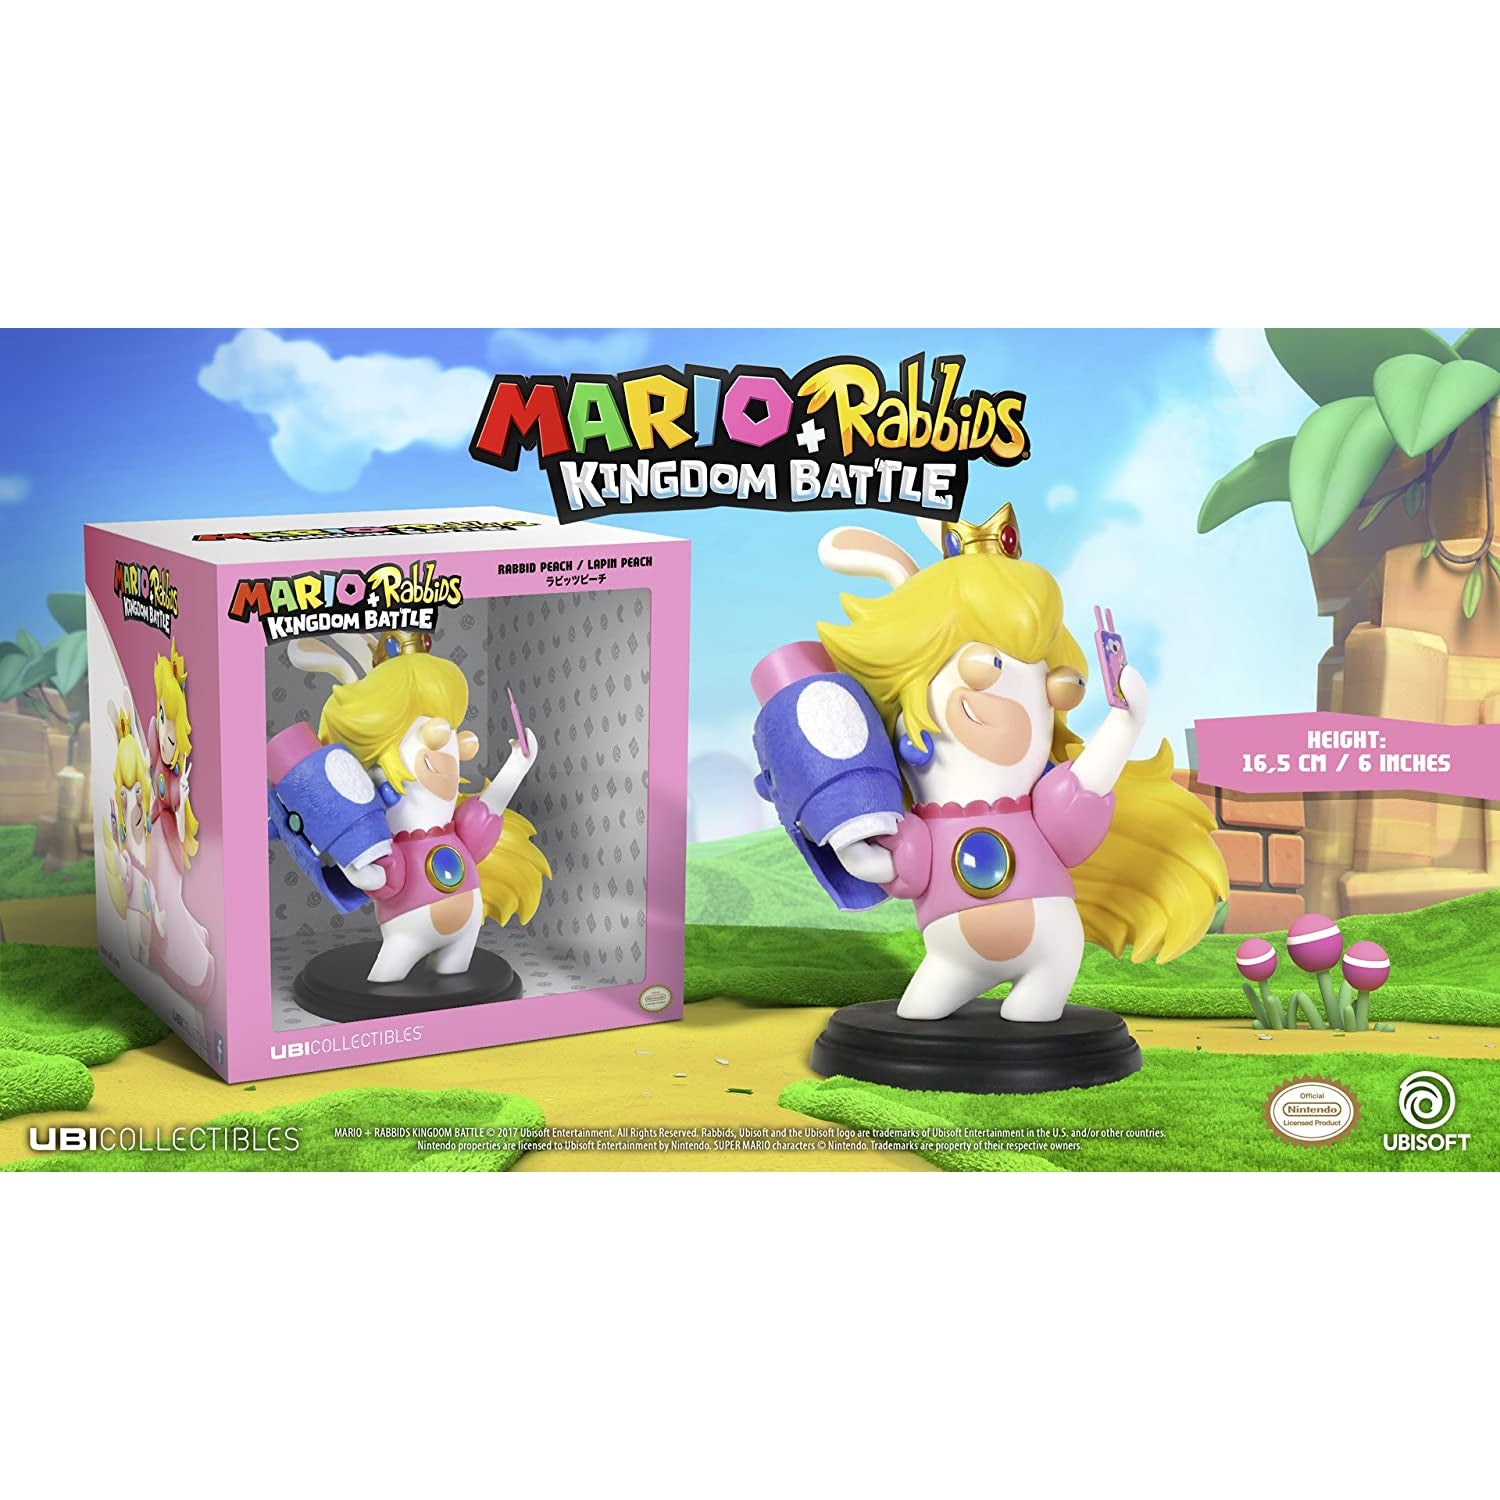 Mario + Rabbids Kingdom Battle Collector's Edition - Rabbid Peach Figure